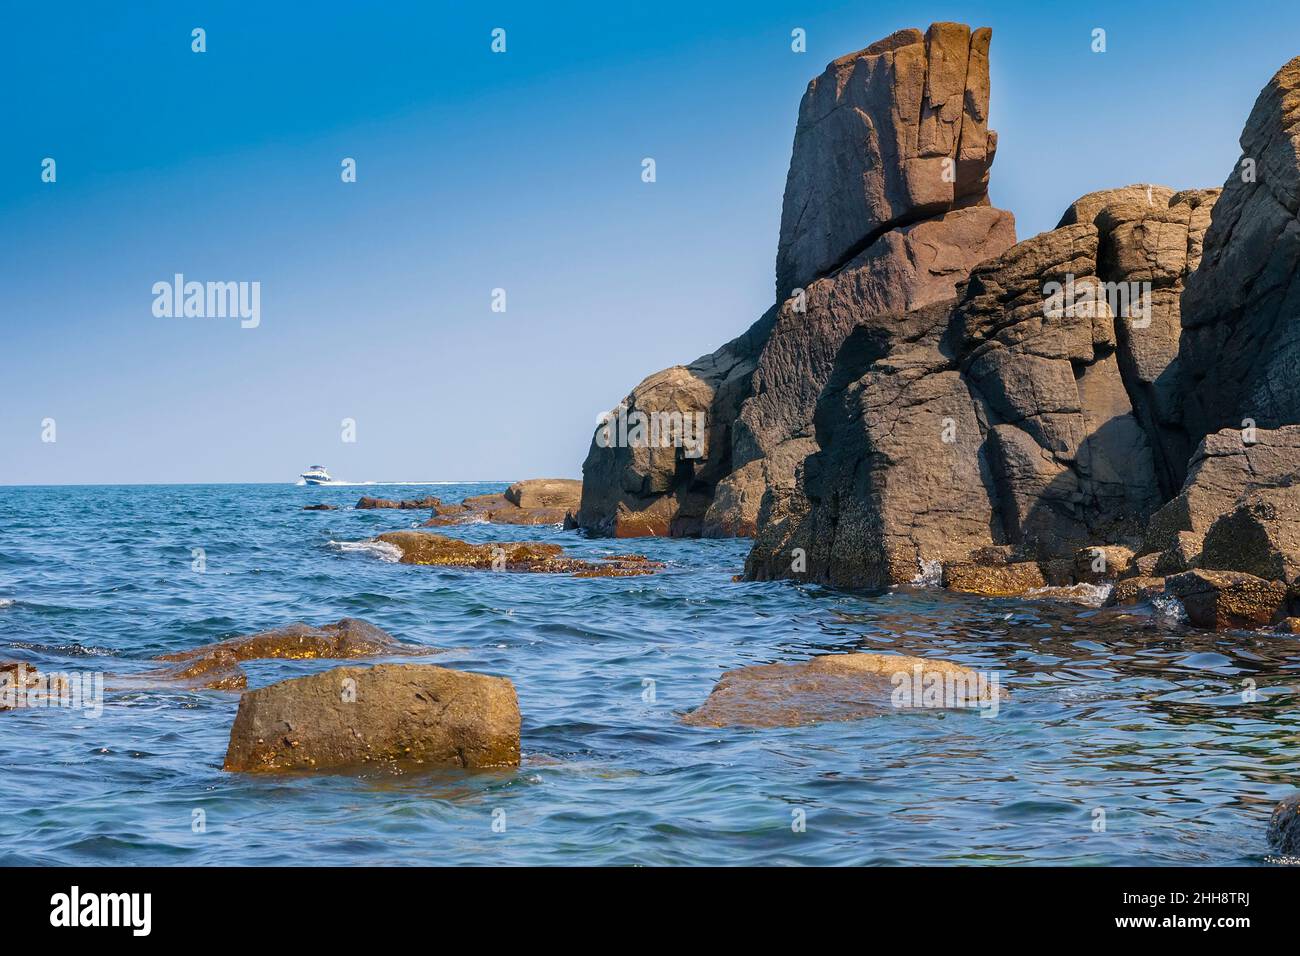 Rocky seashore against the blue sky and motor boat on the horizon. Nessebar. Bulgaria Stock Photo